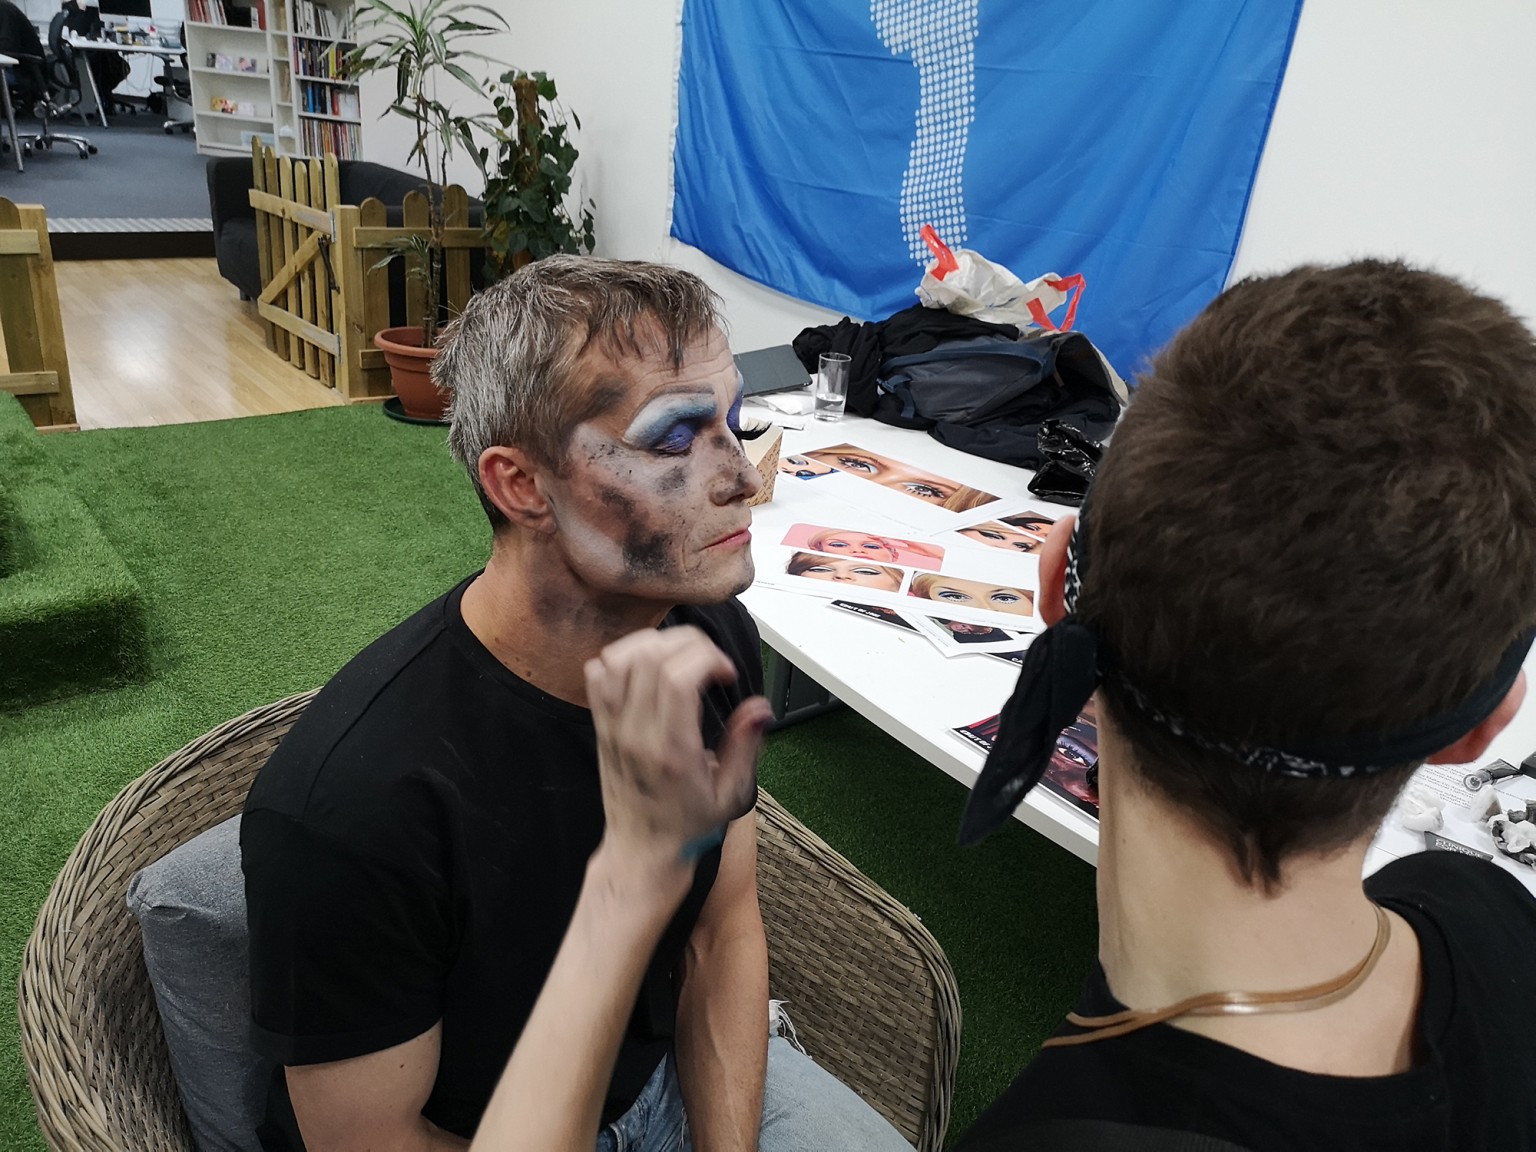 Jack applying Bill's drag makeup